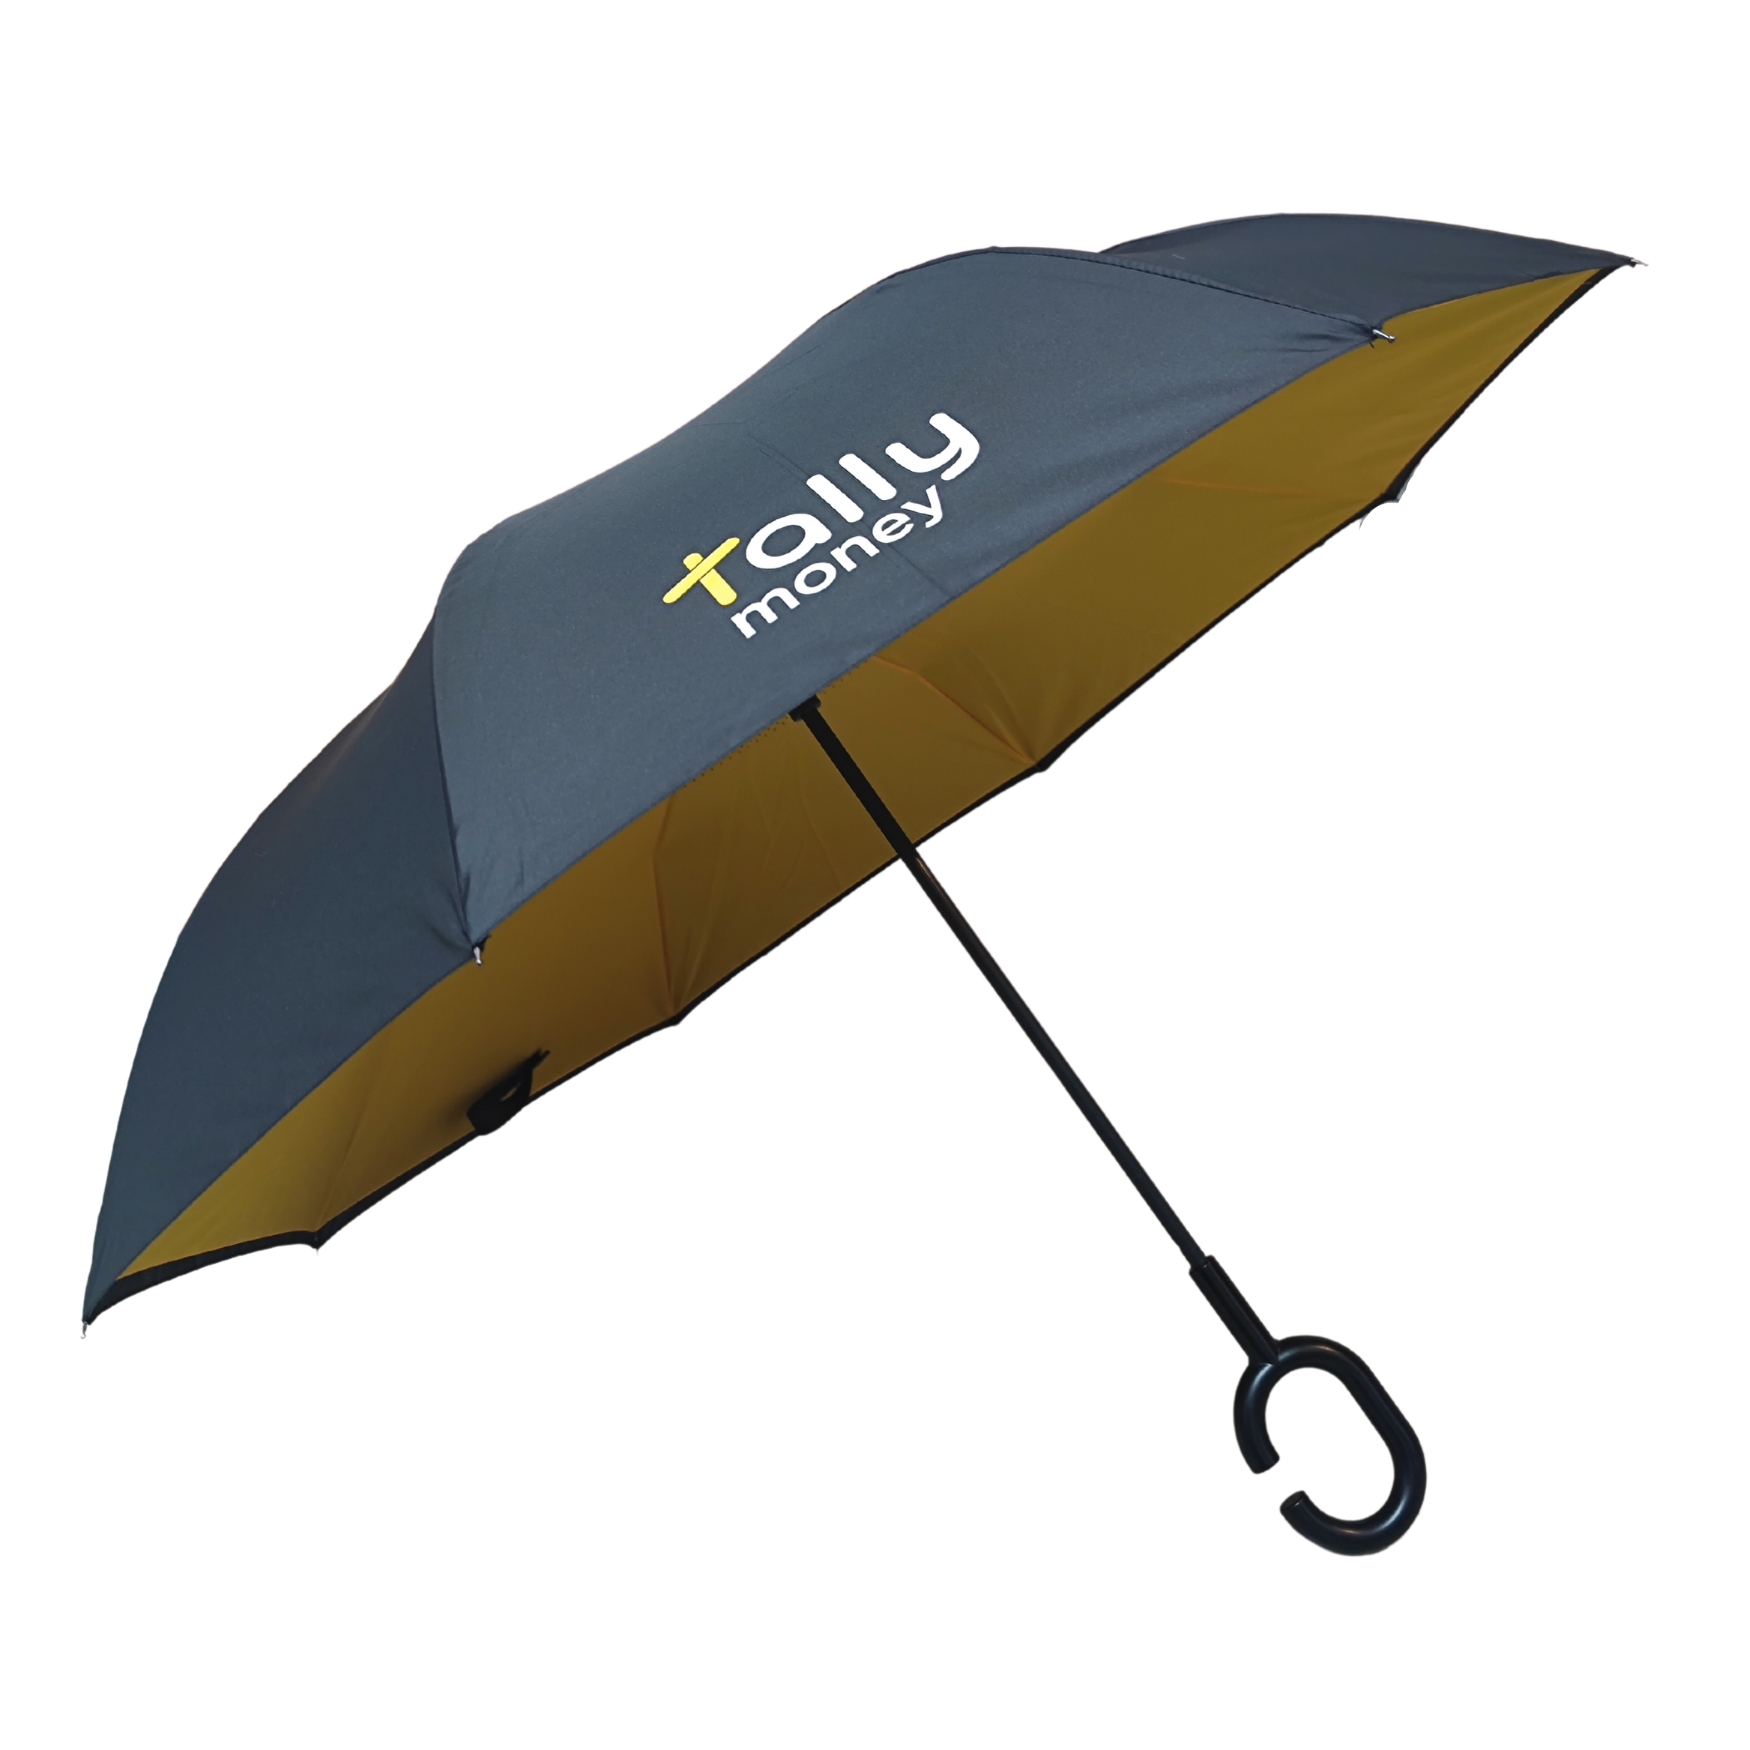 Branded Umbrella Sample